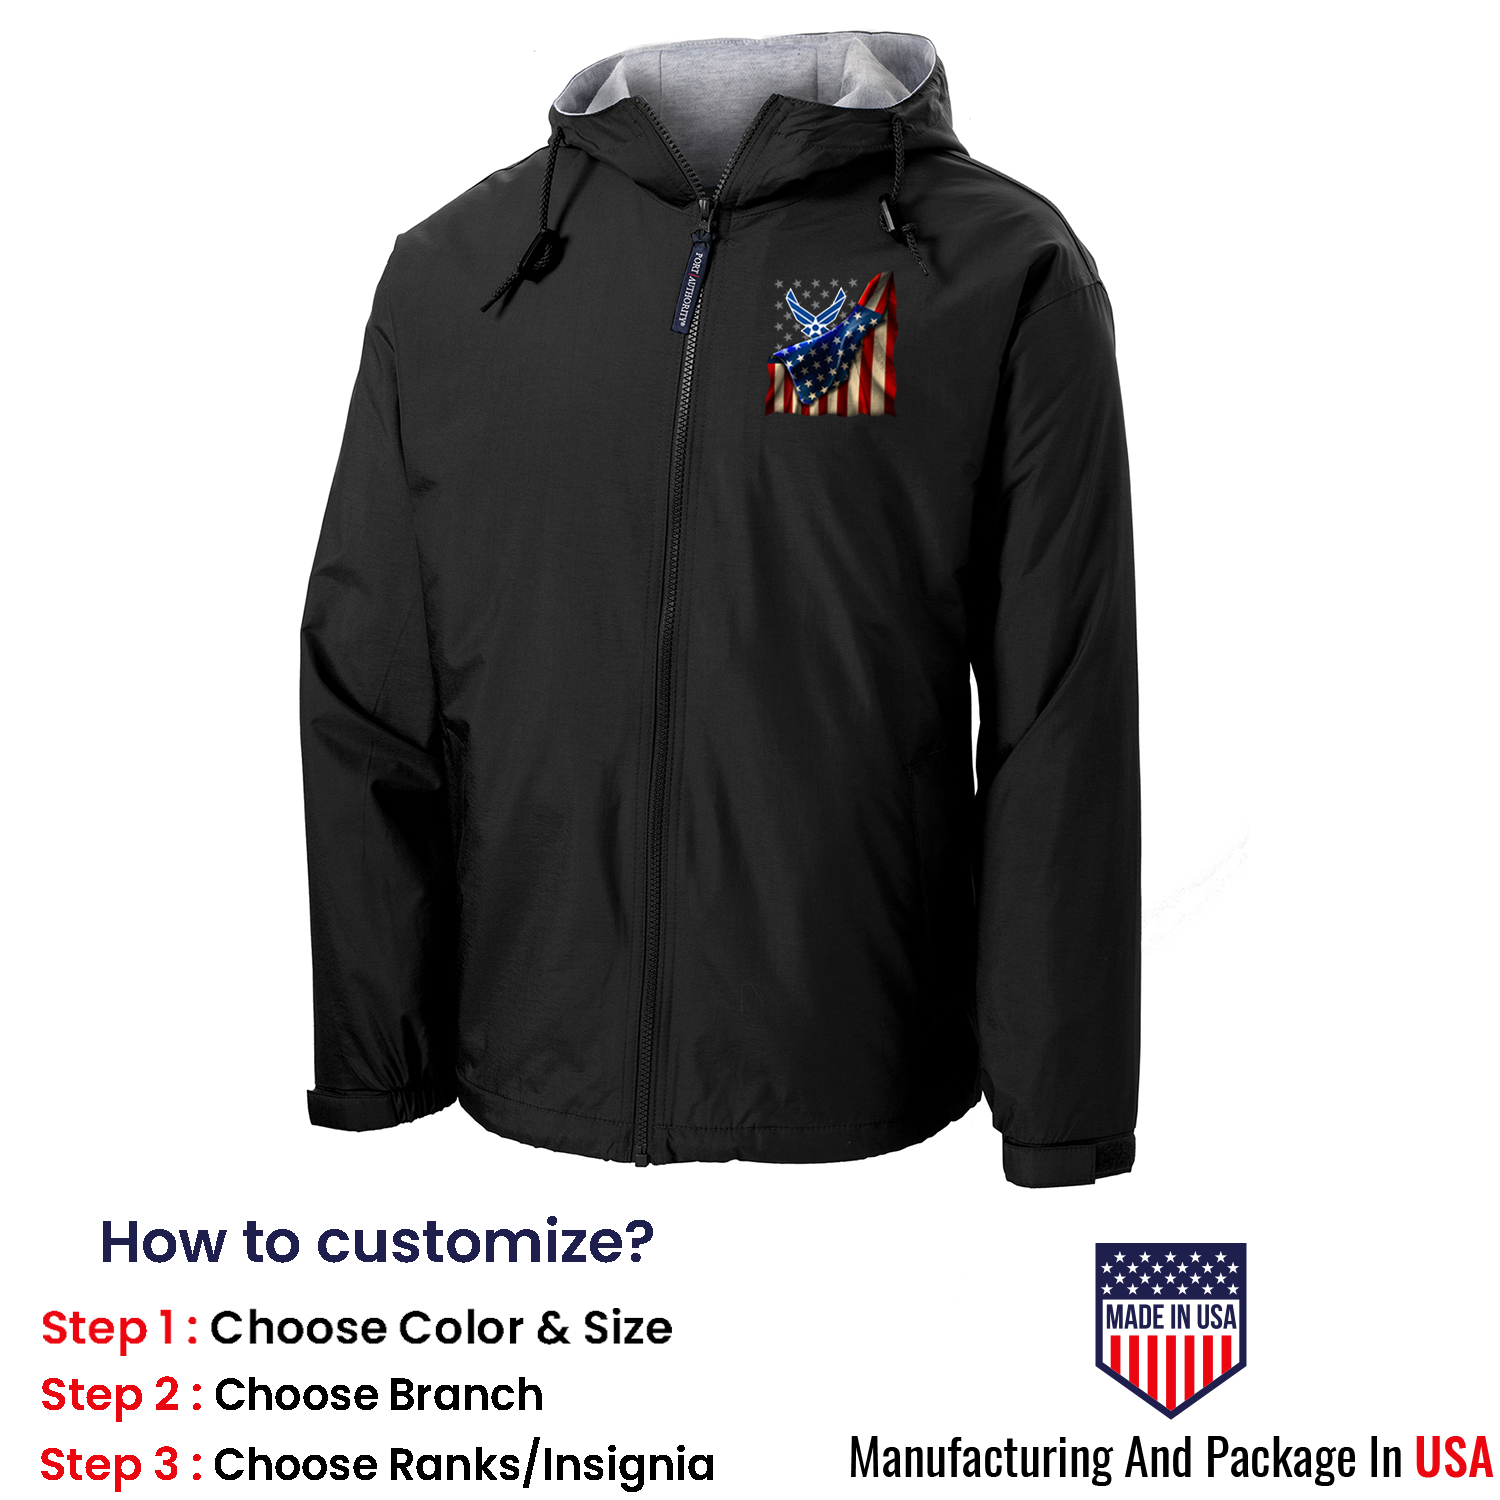 Custom US Air Force Ranks/Insignia, USA Flag, Print On Left Chest Team Jacket